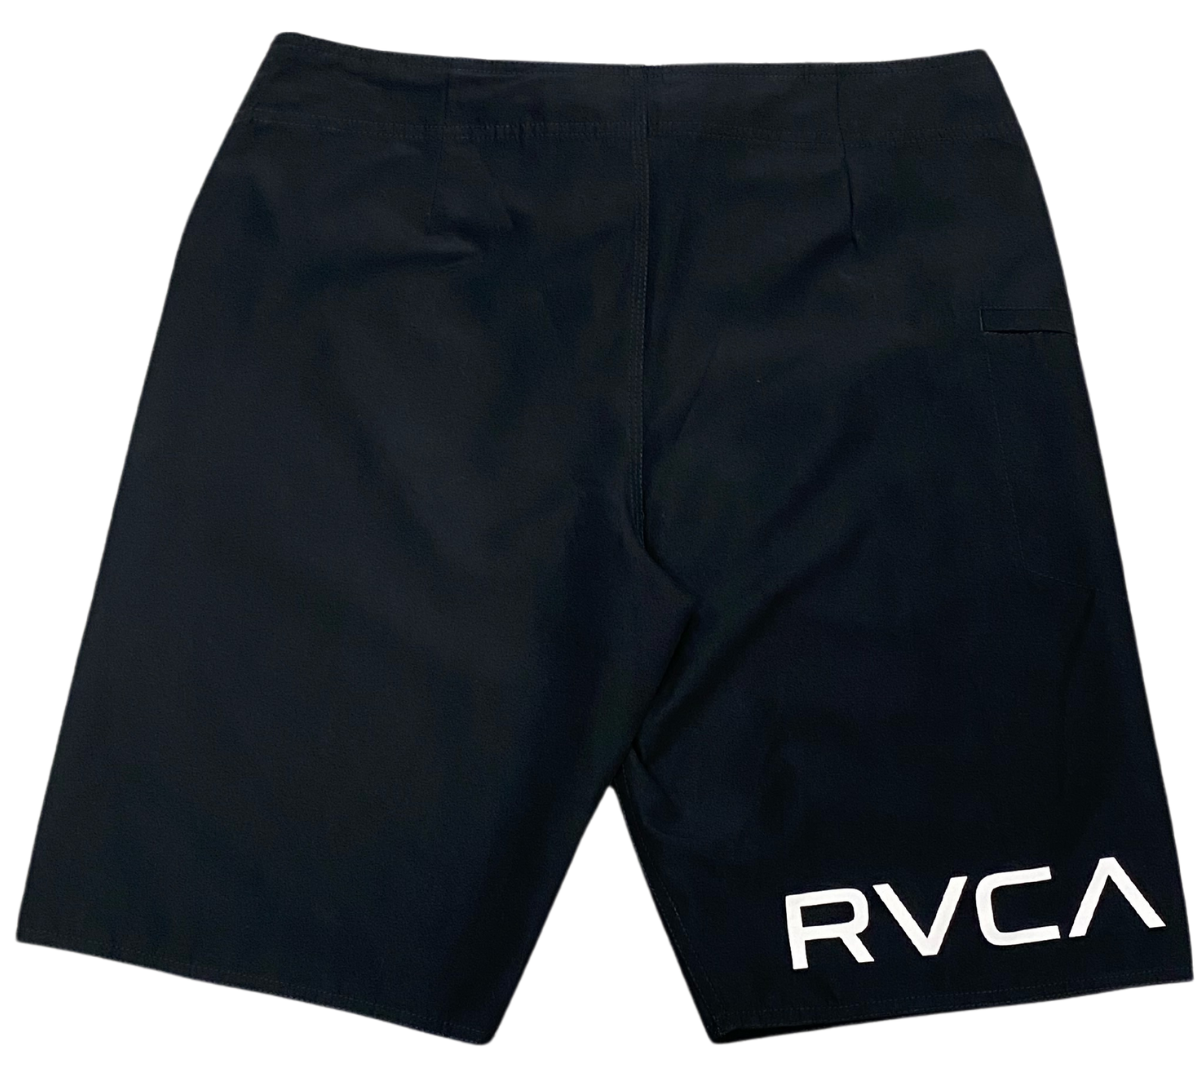 RVCA Men's Standard Upper Trunk